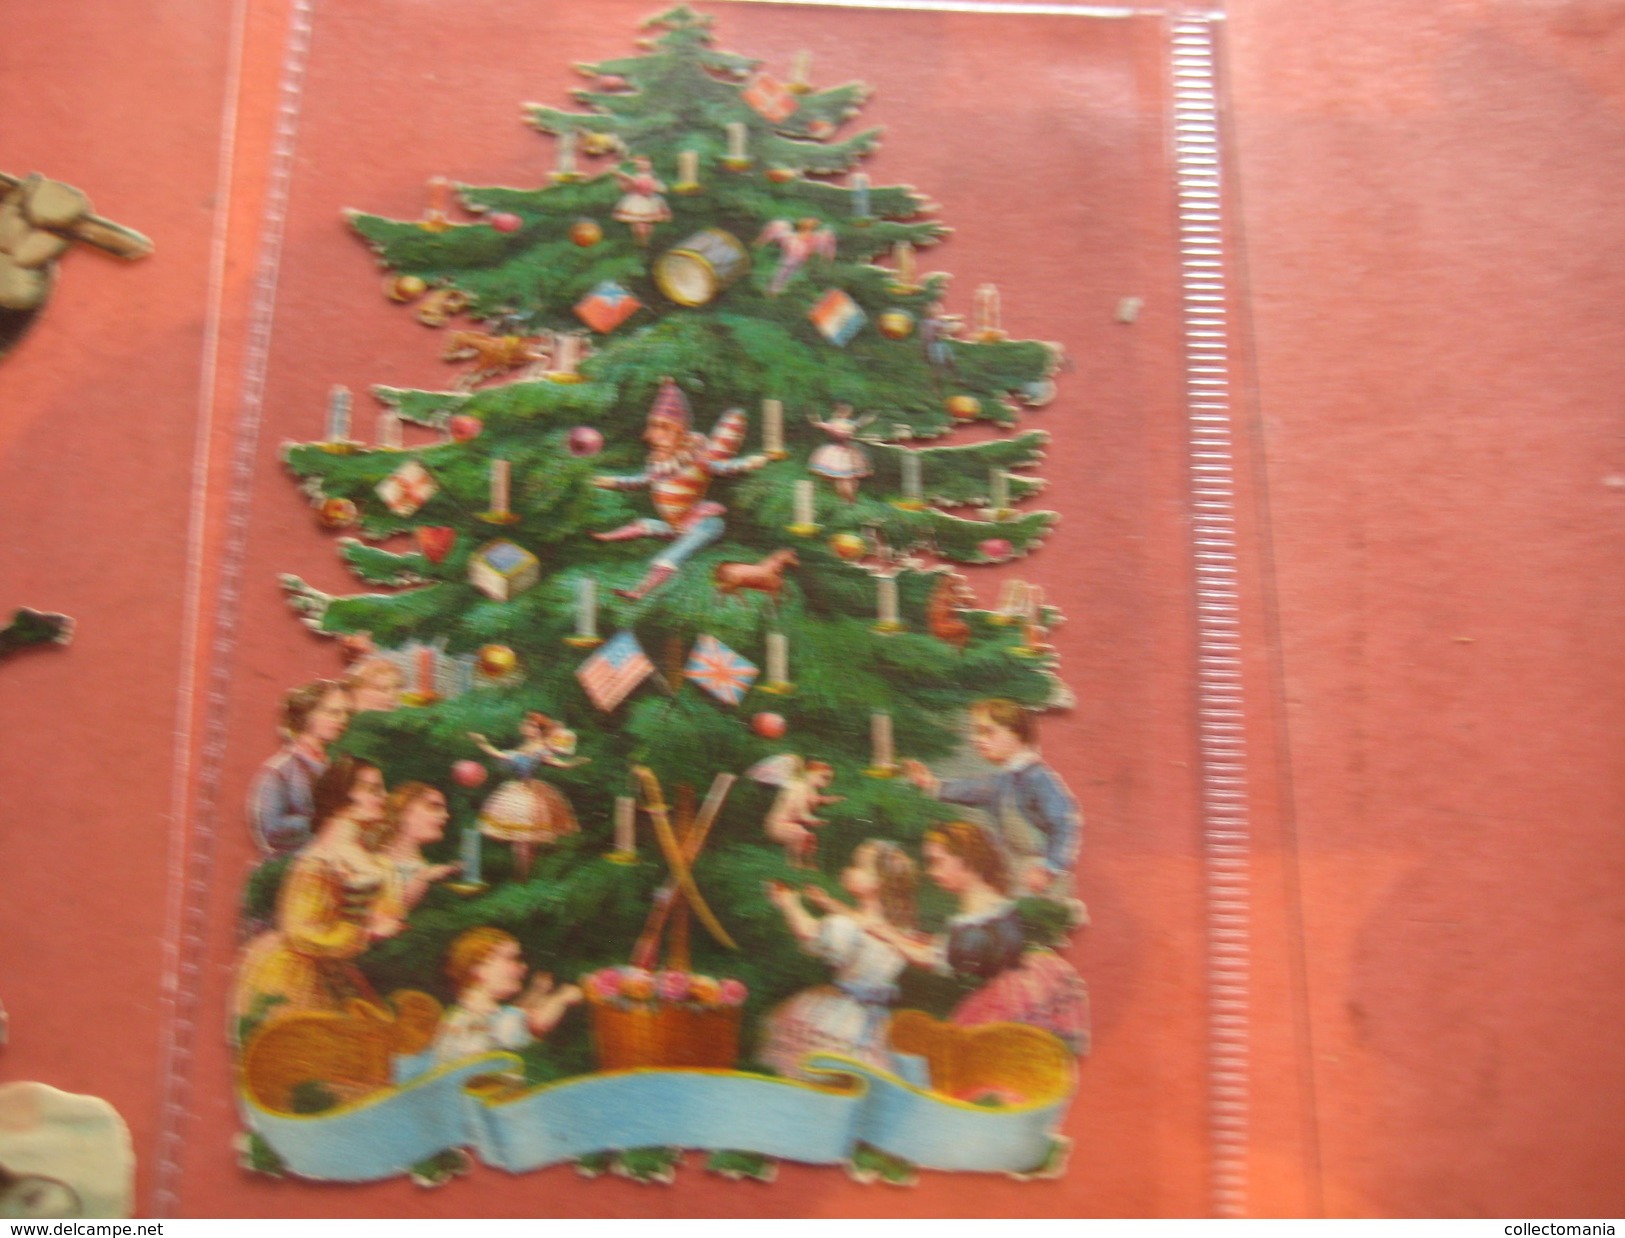 circa 1880 Weinacht scraps VG christmas kerst 10X6,5cm, 2 PERES NOEL 8X13cm, 2 balloons 5,5X9cm DIE CUT, SANTA CLAUS